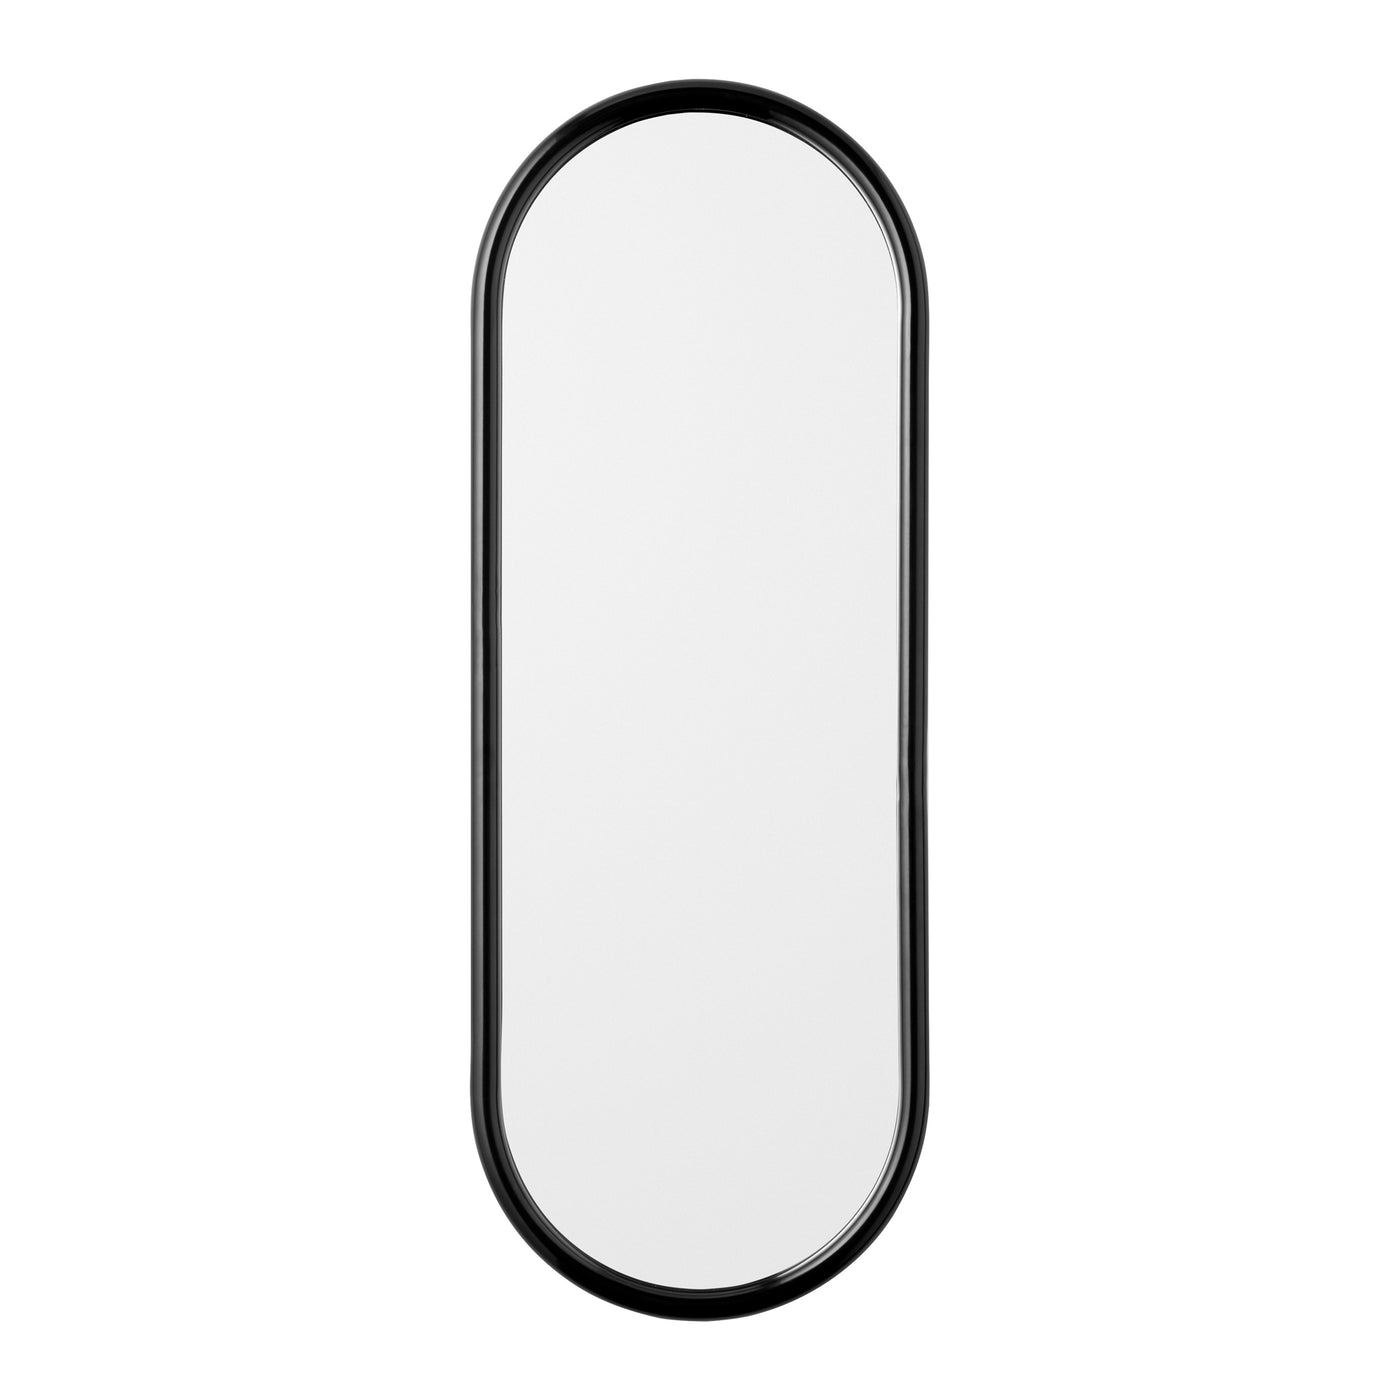 ANGUI zrcadlo, AYTM, oválné zrcadlo, moderní nástěnné zrcadlo, Luxusní nástěnné zrcadlo, 